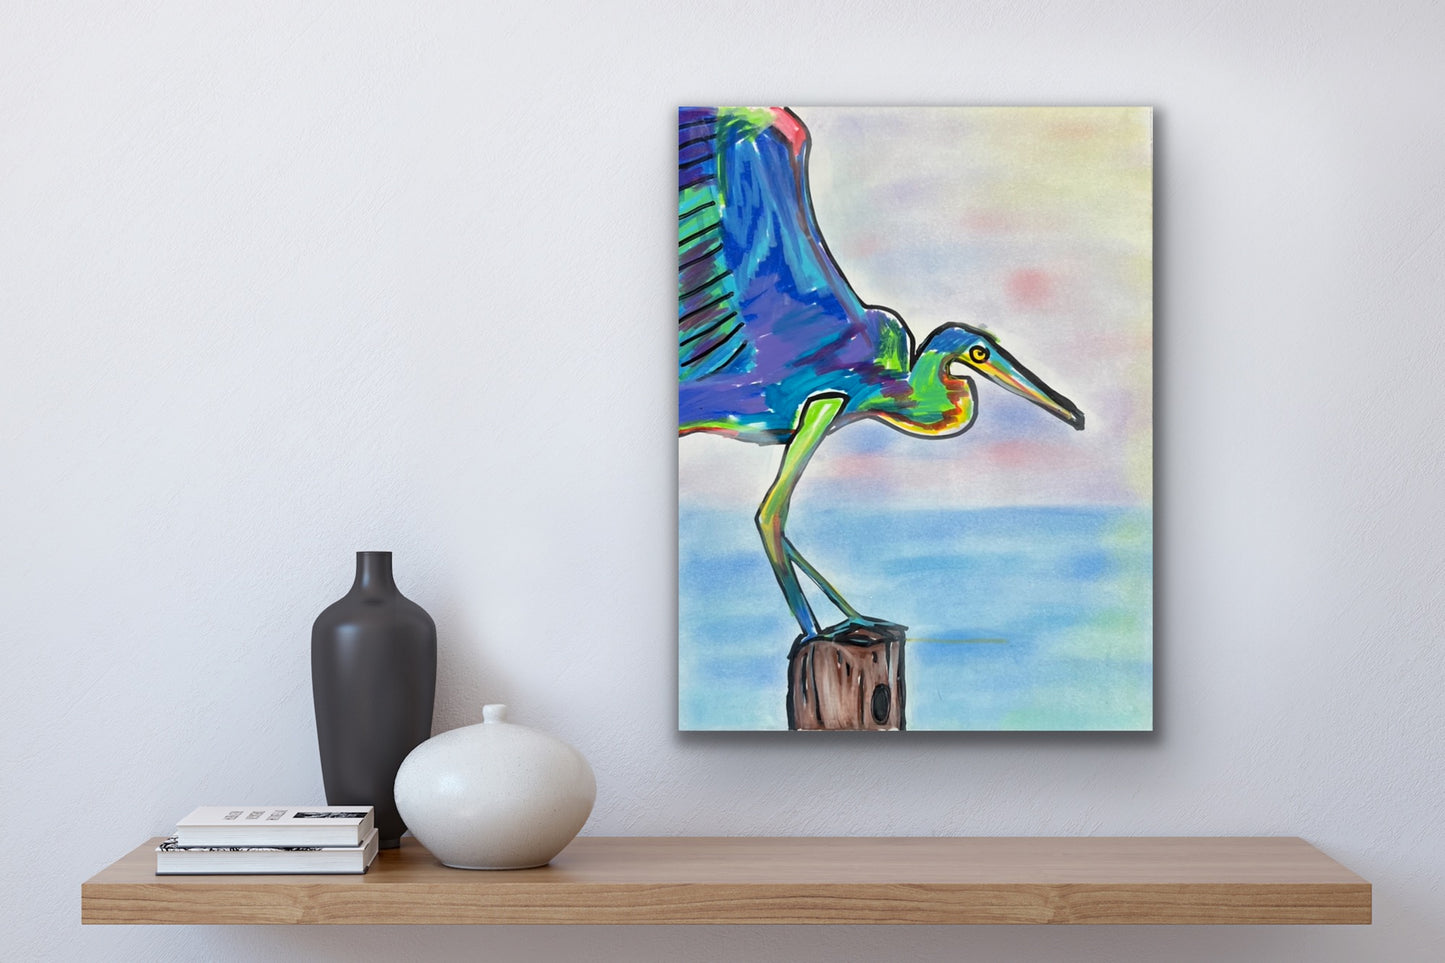 Heron Bird - ORIGINAL OIL PASTEL ARTWORK - 11x14"